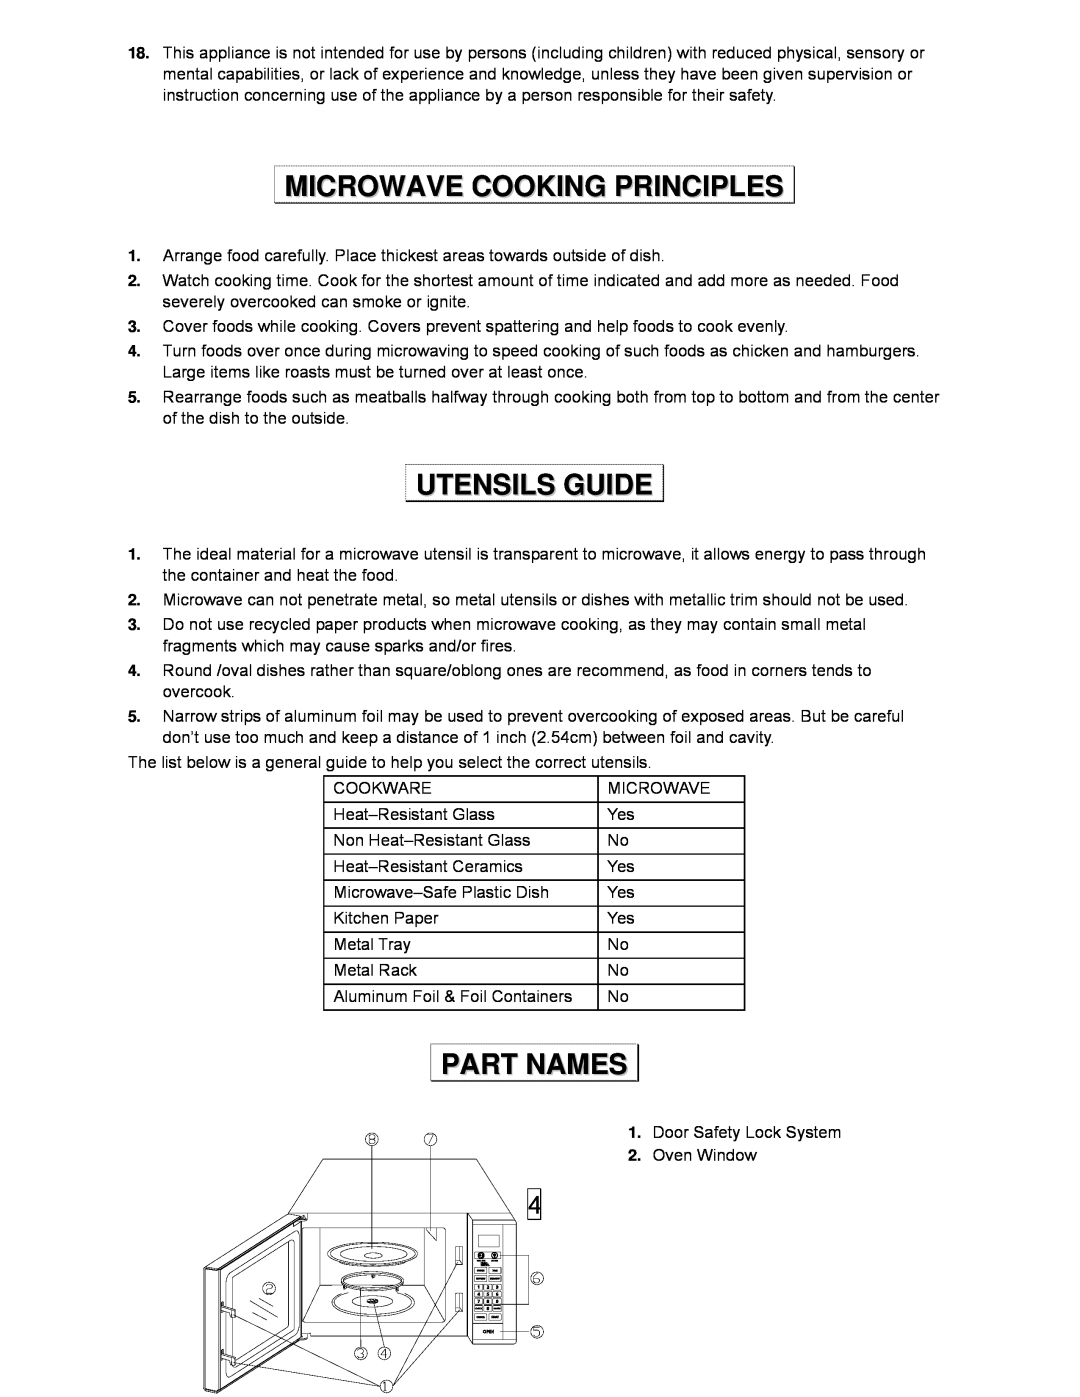 Sanyo EM-S5597B instruction manual Microwave Cooking Principles, Utensils Guide, Part Names 